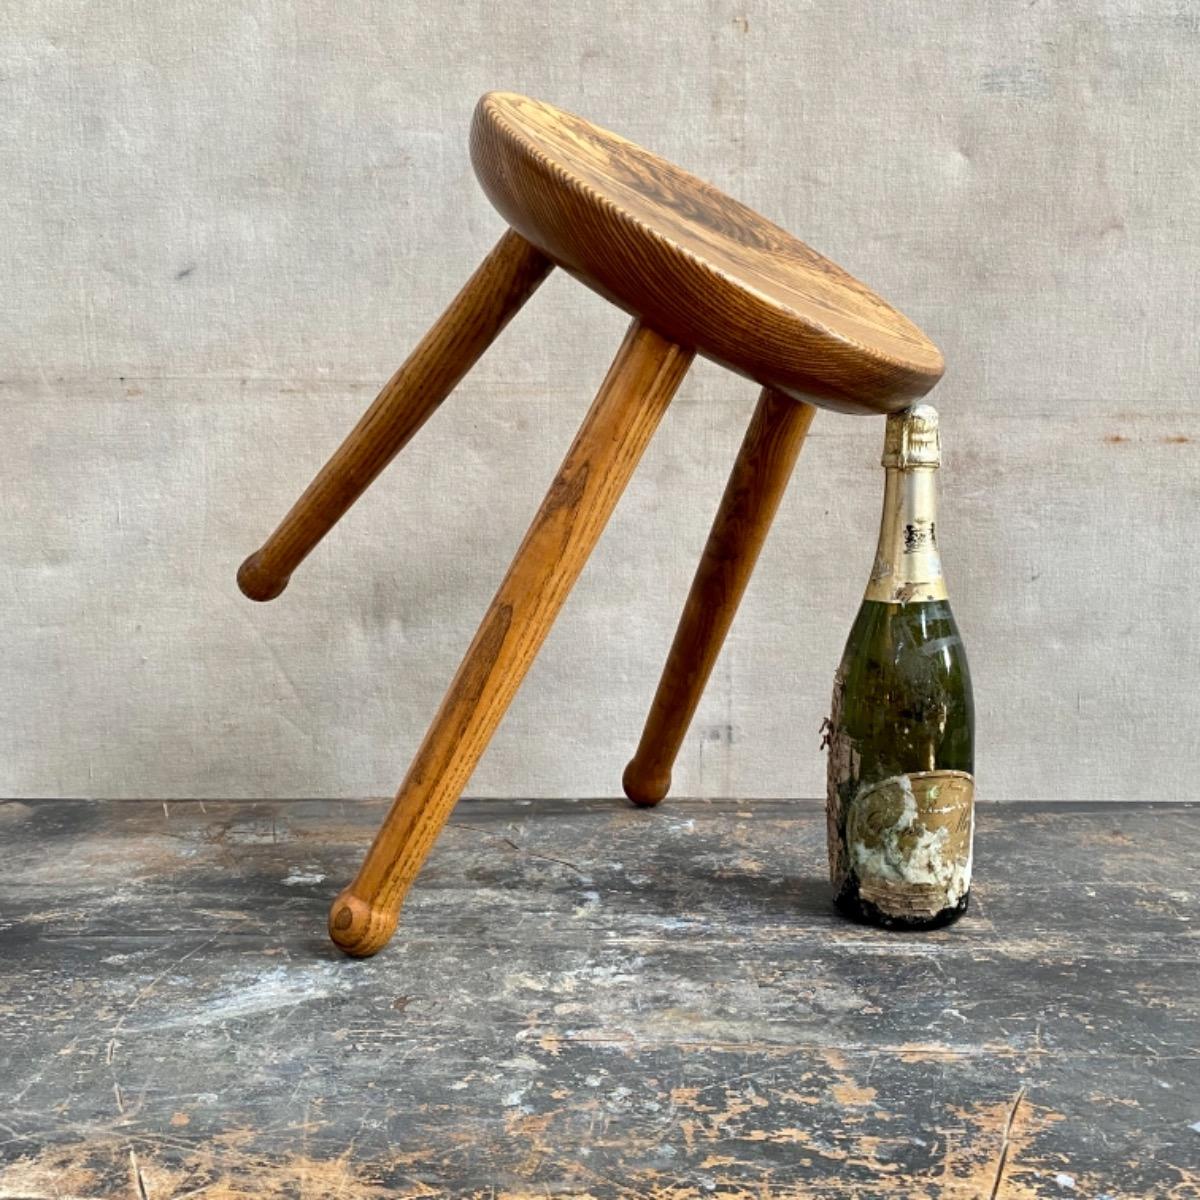 Modernist stool